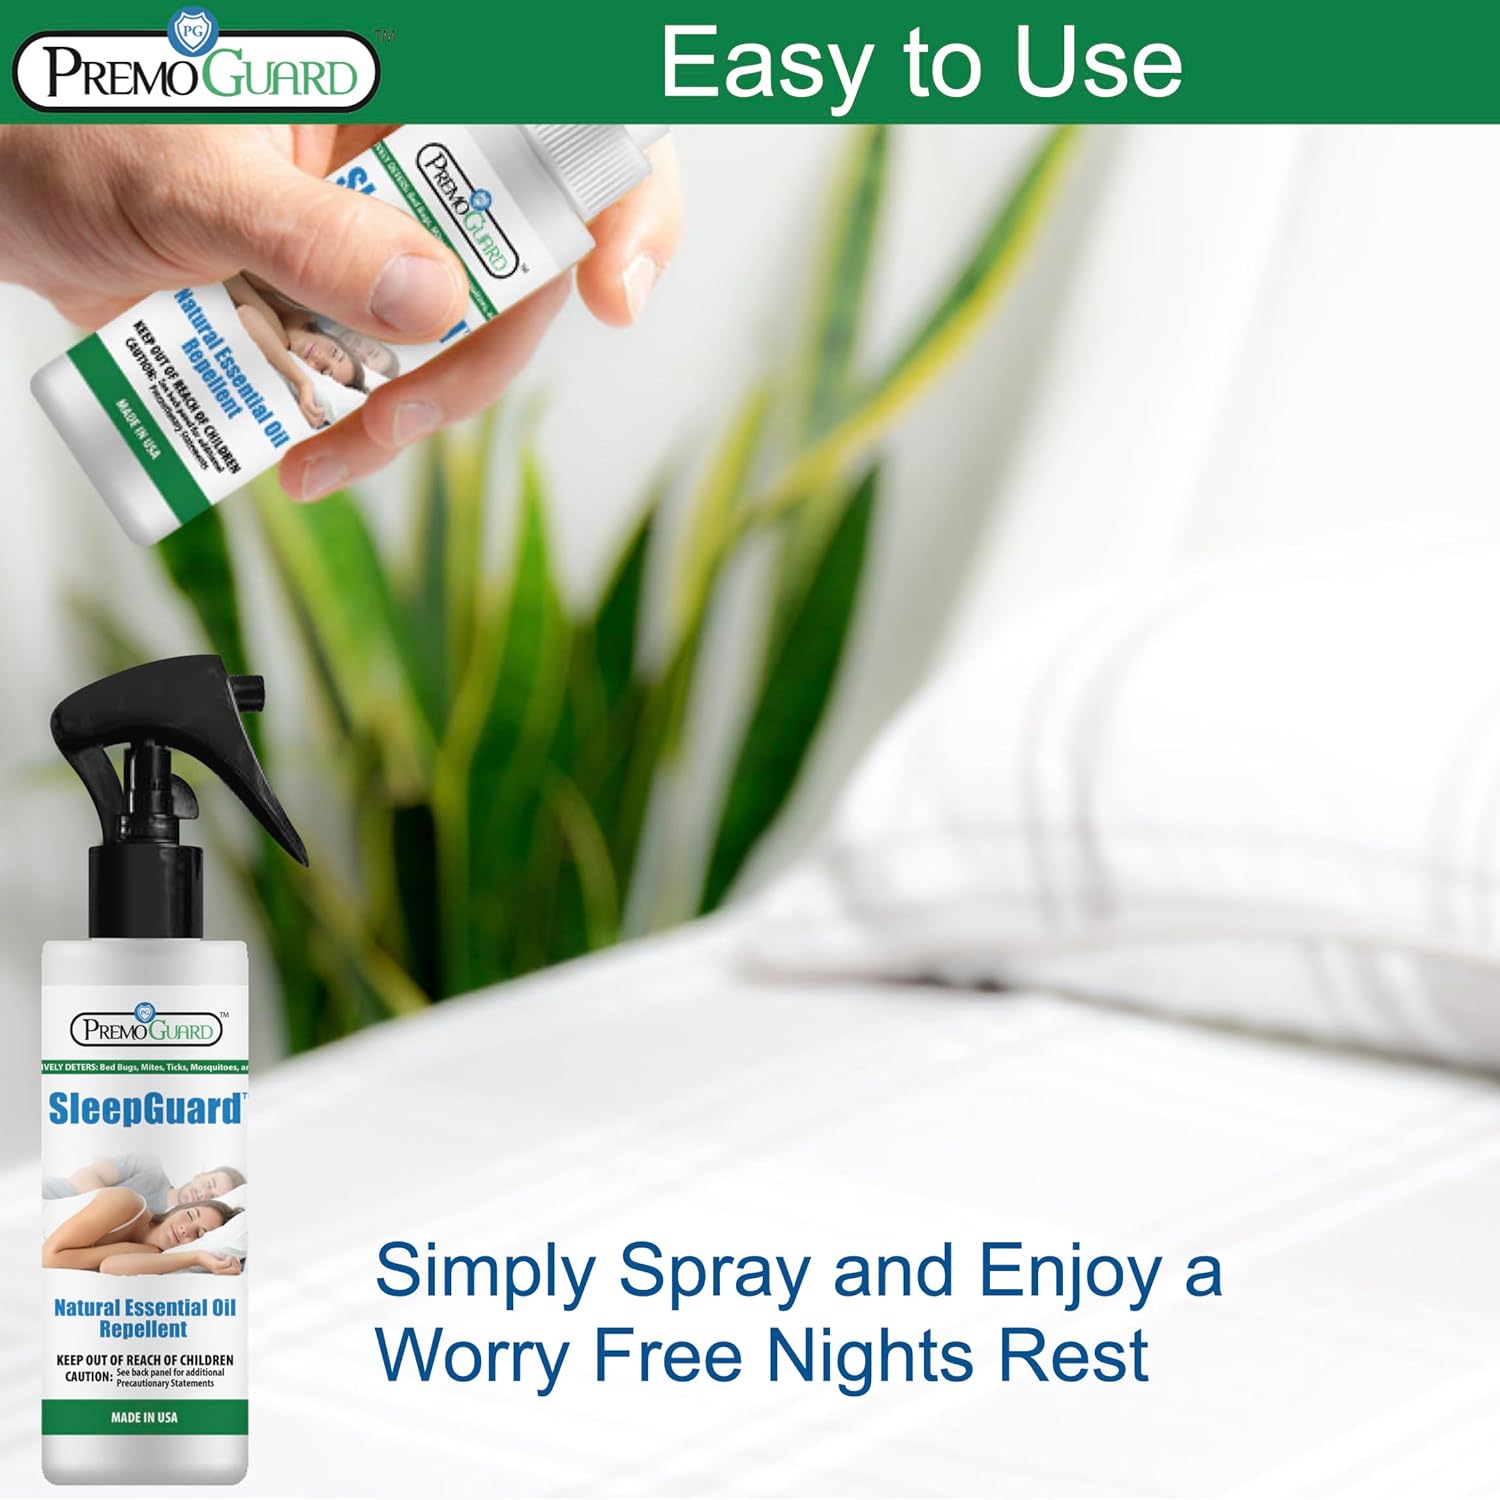 Bed Bug Repellent by Premo Guard  - 8 oz